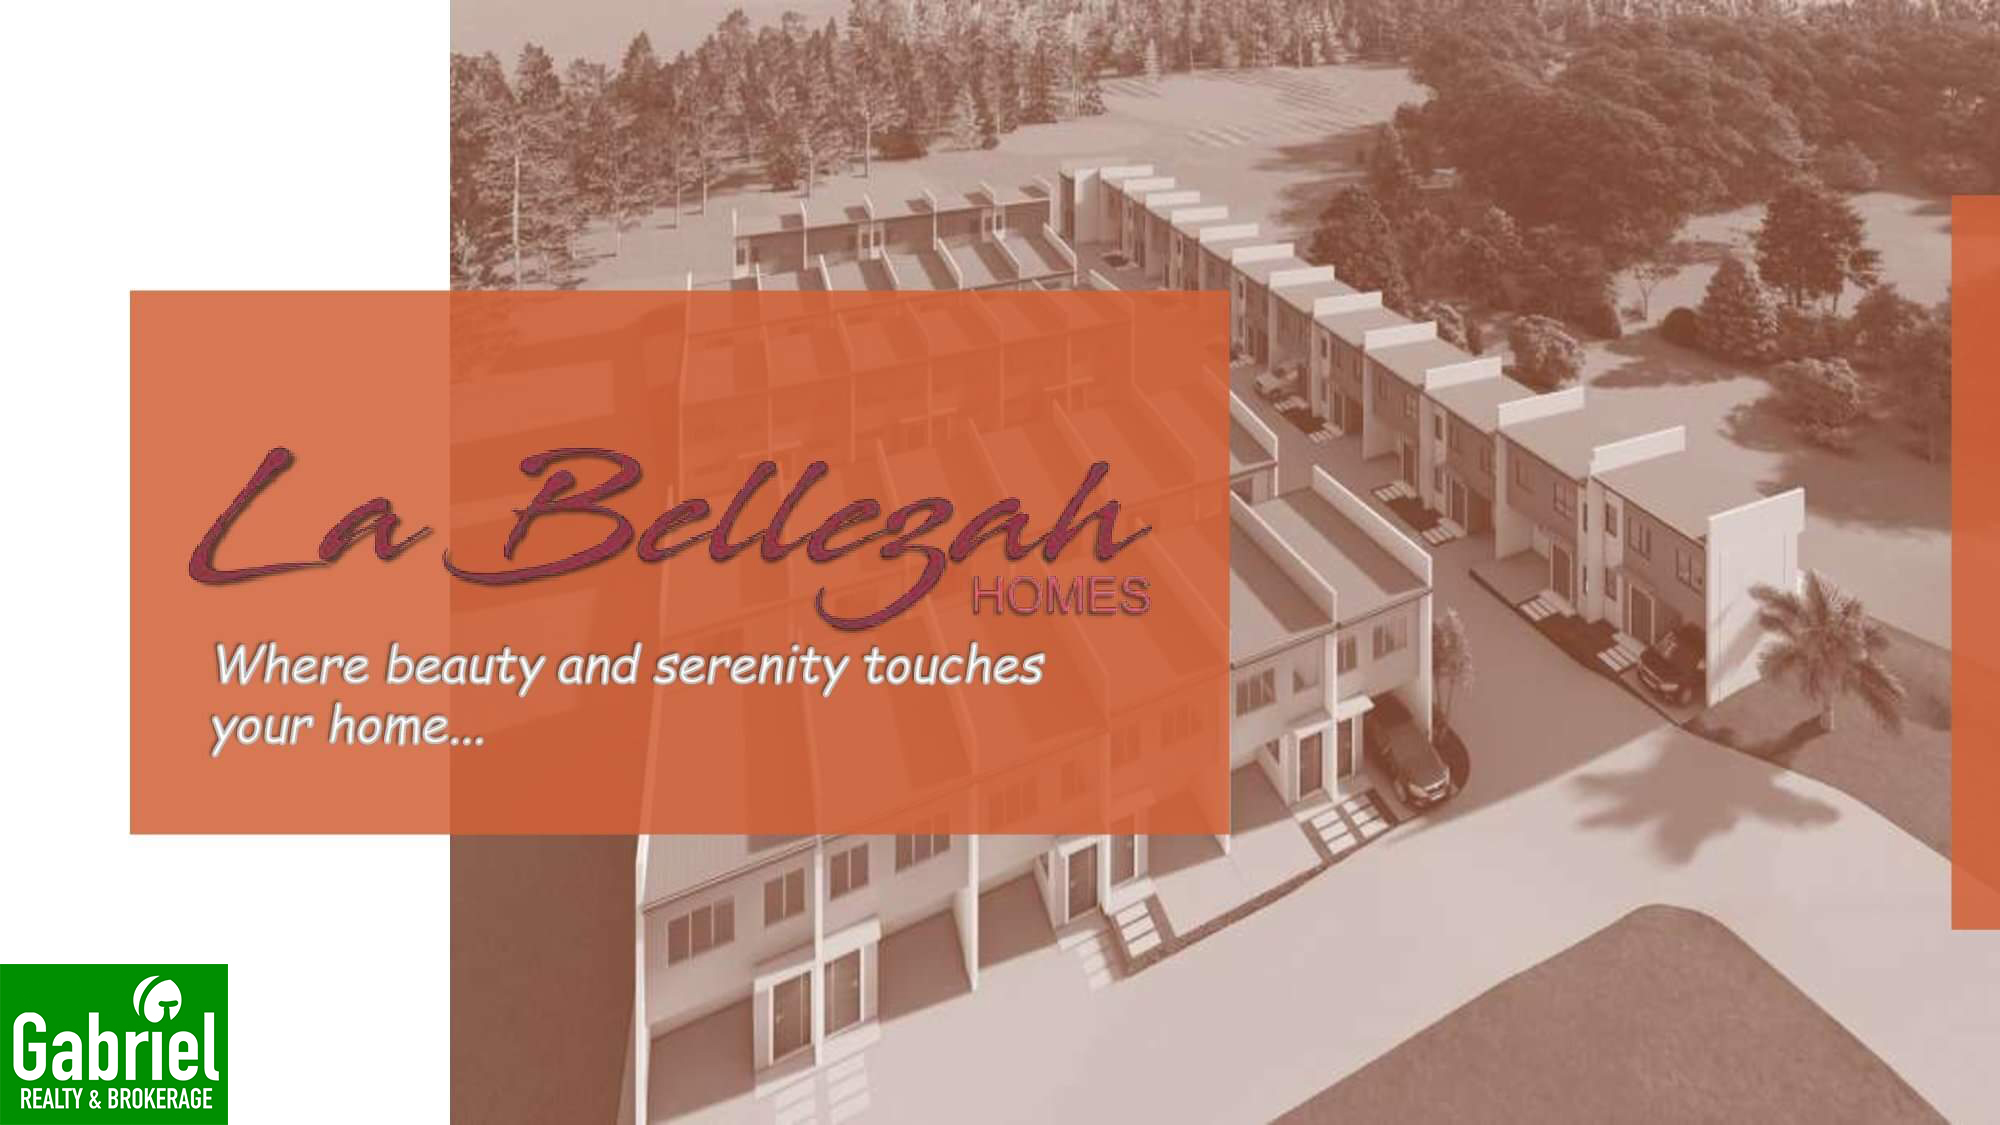 La Bellezah Homes in Talamban Cebu City 